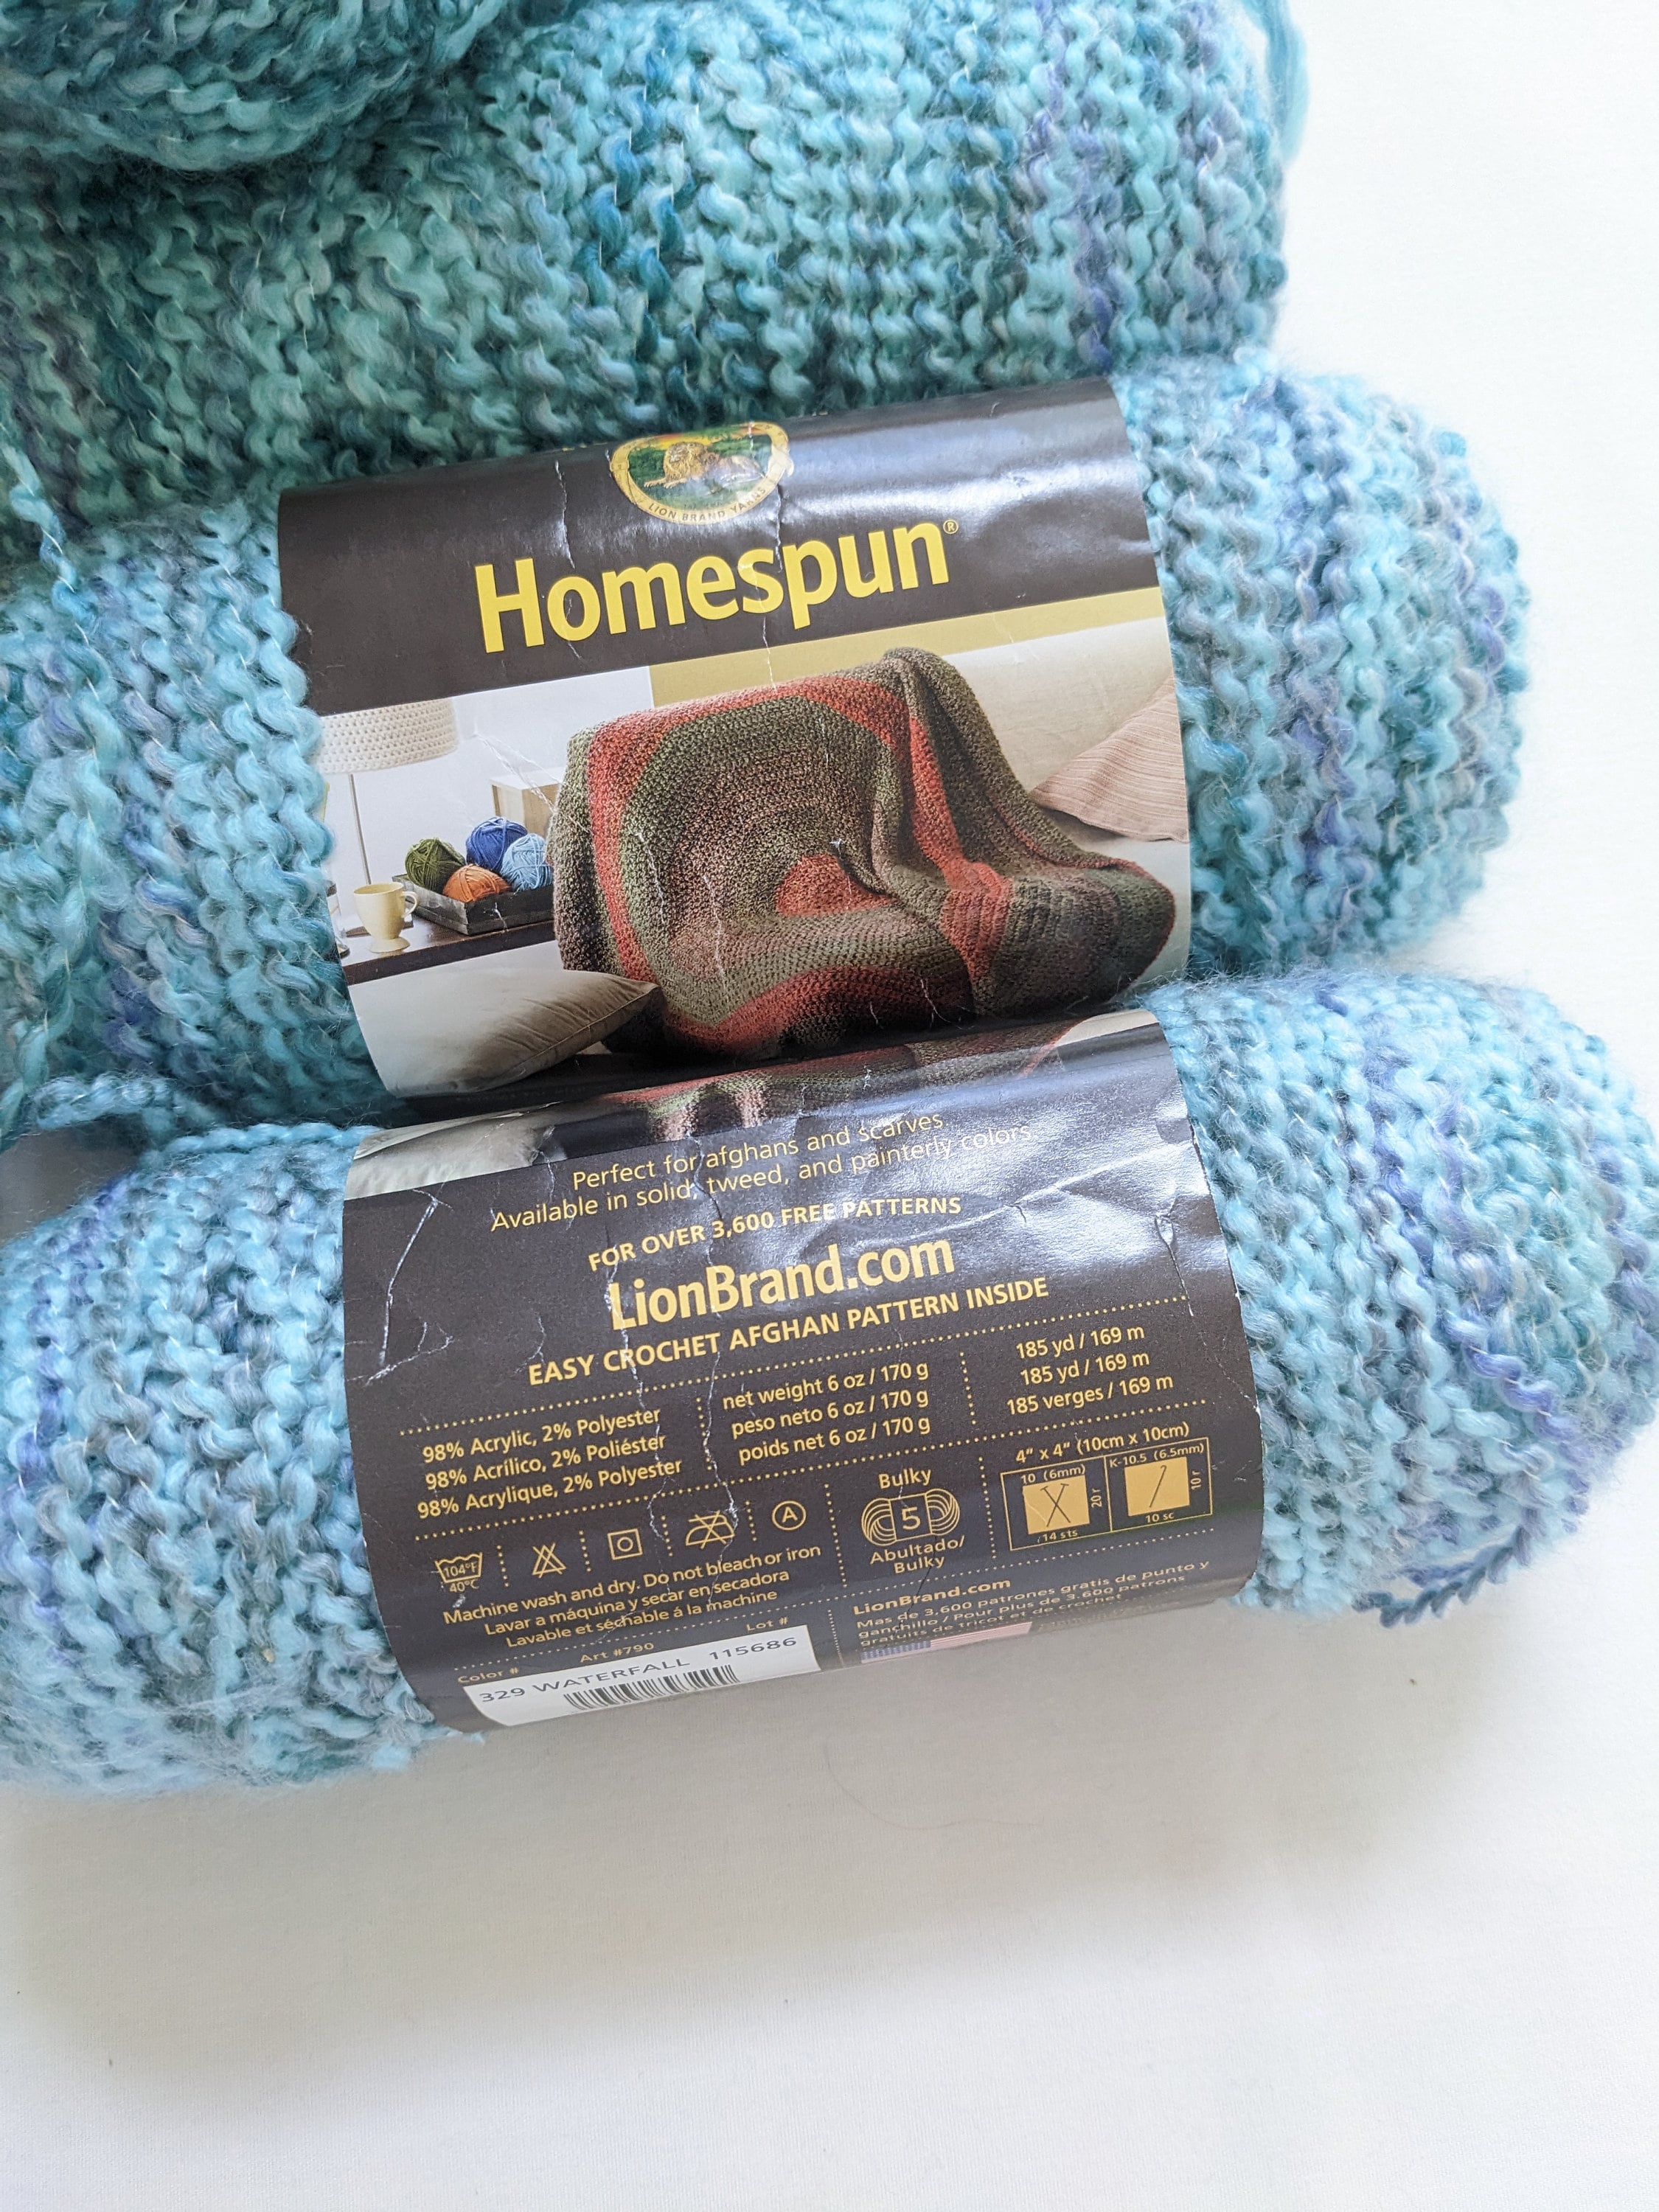 Lot Lion Brand Homespun yarn blue shades knitting crochet 14 oz total